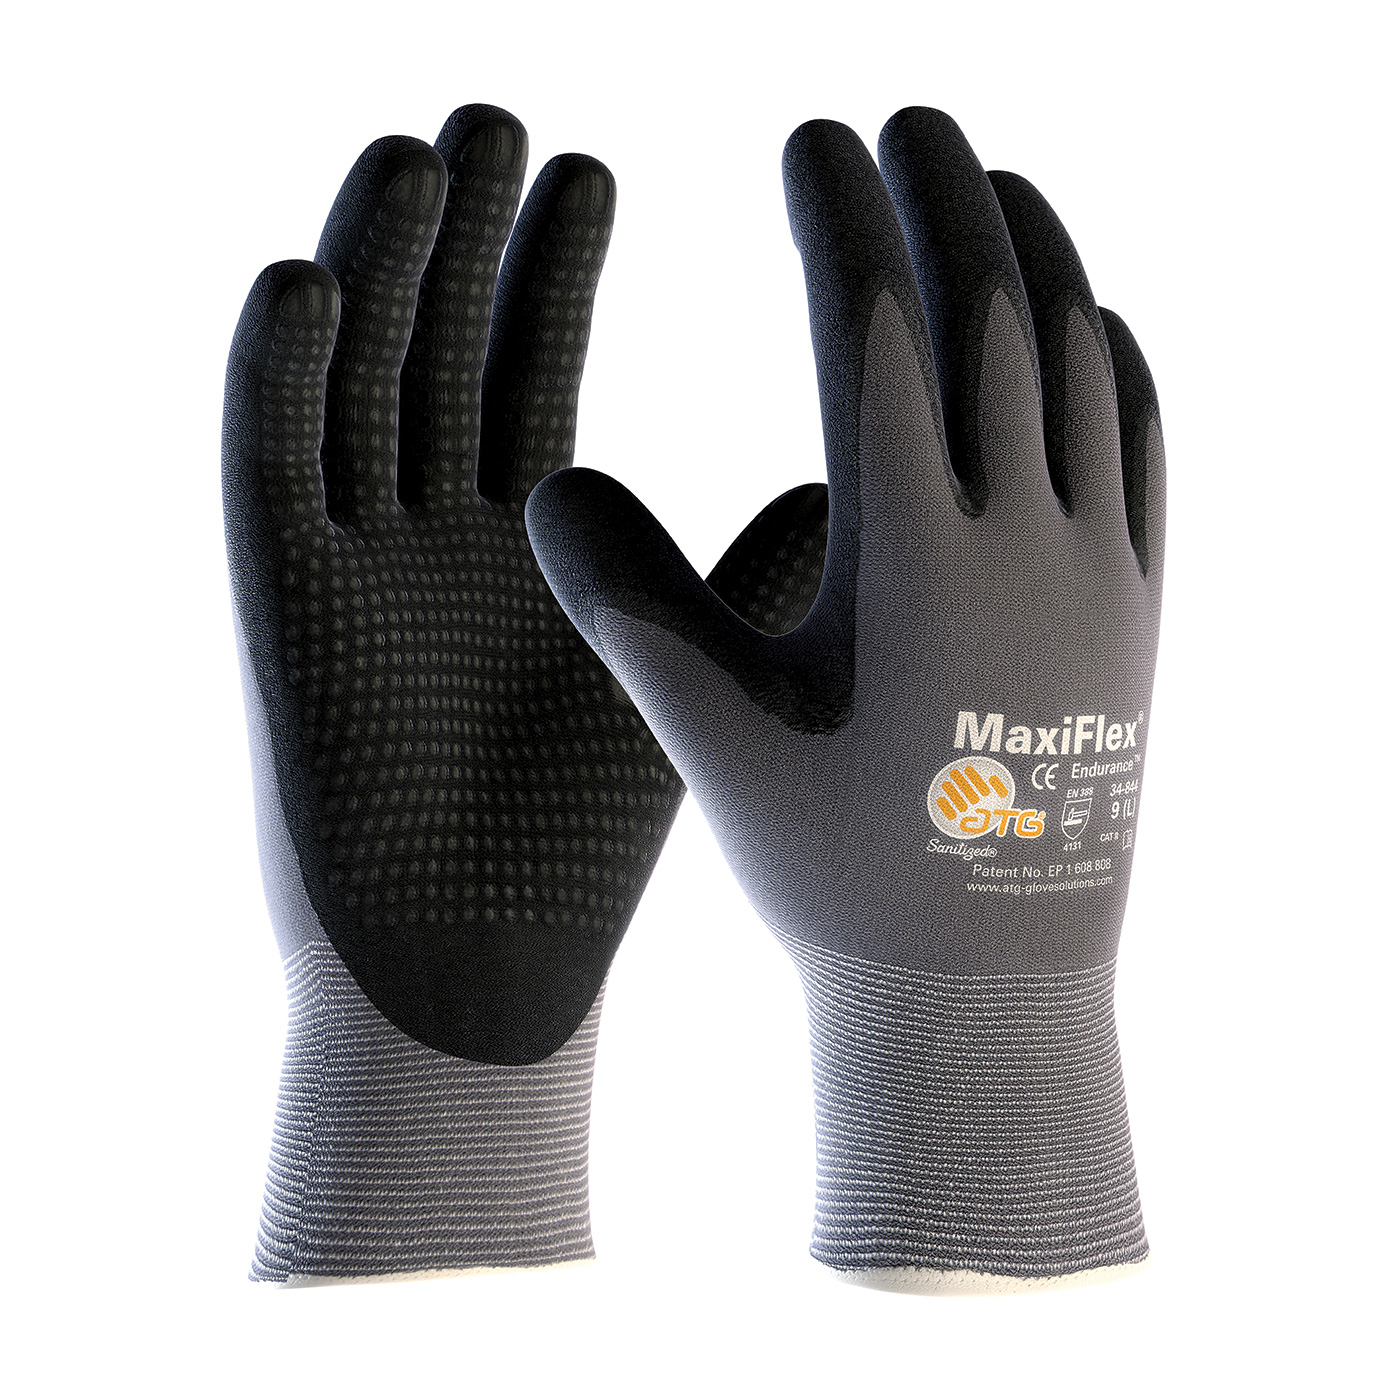 PIP 34-844/XL MaxiFlex Endurance Seamless Knit Nylon Glove with Nitrile Coated MicroFoam Grip on Palm & Fingers - Micro Dot Palm - X-Large PID-34 844 XL